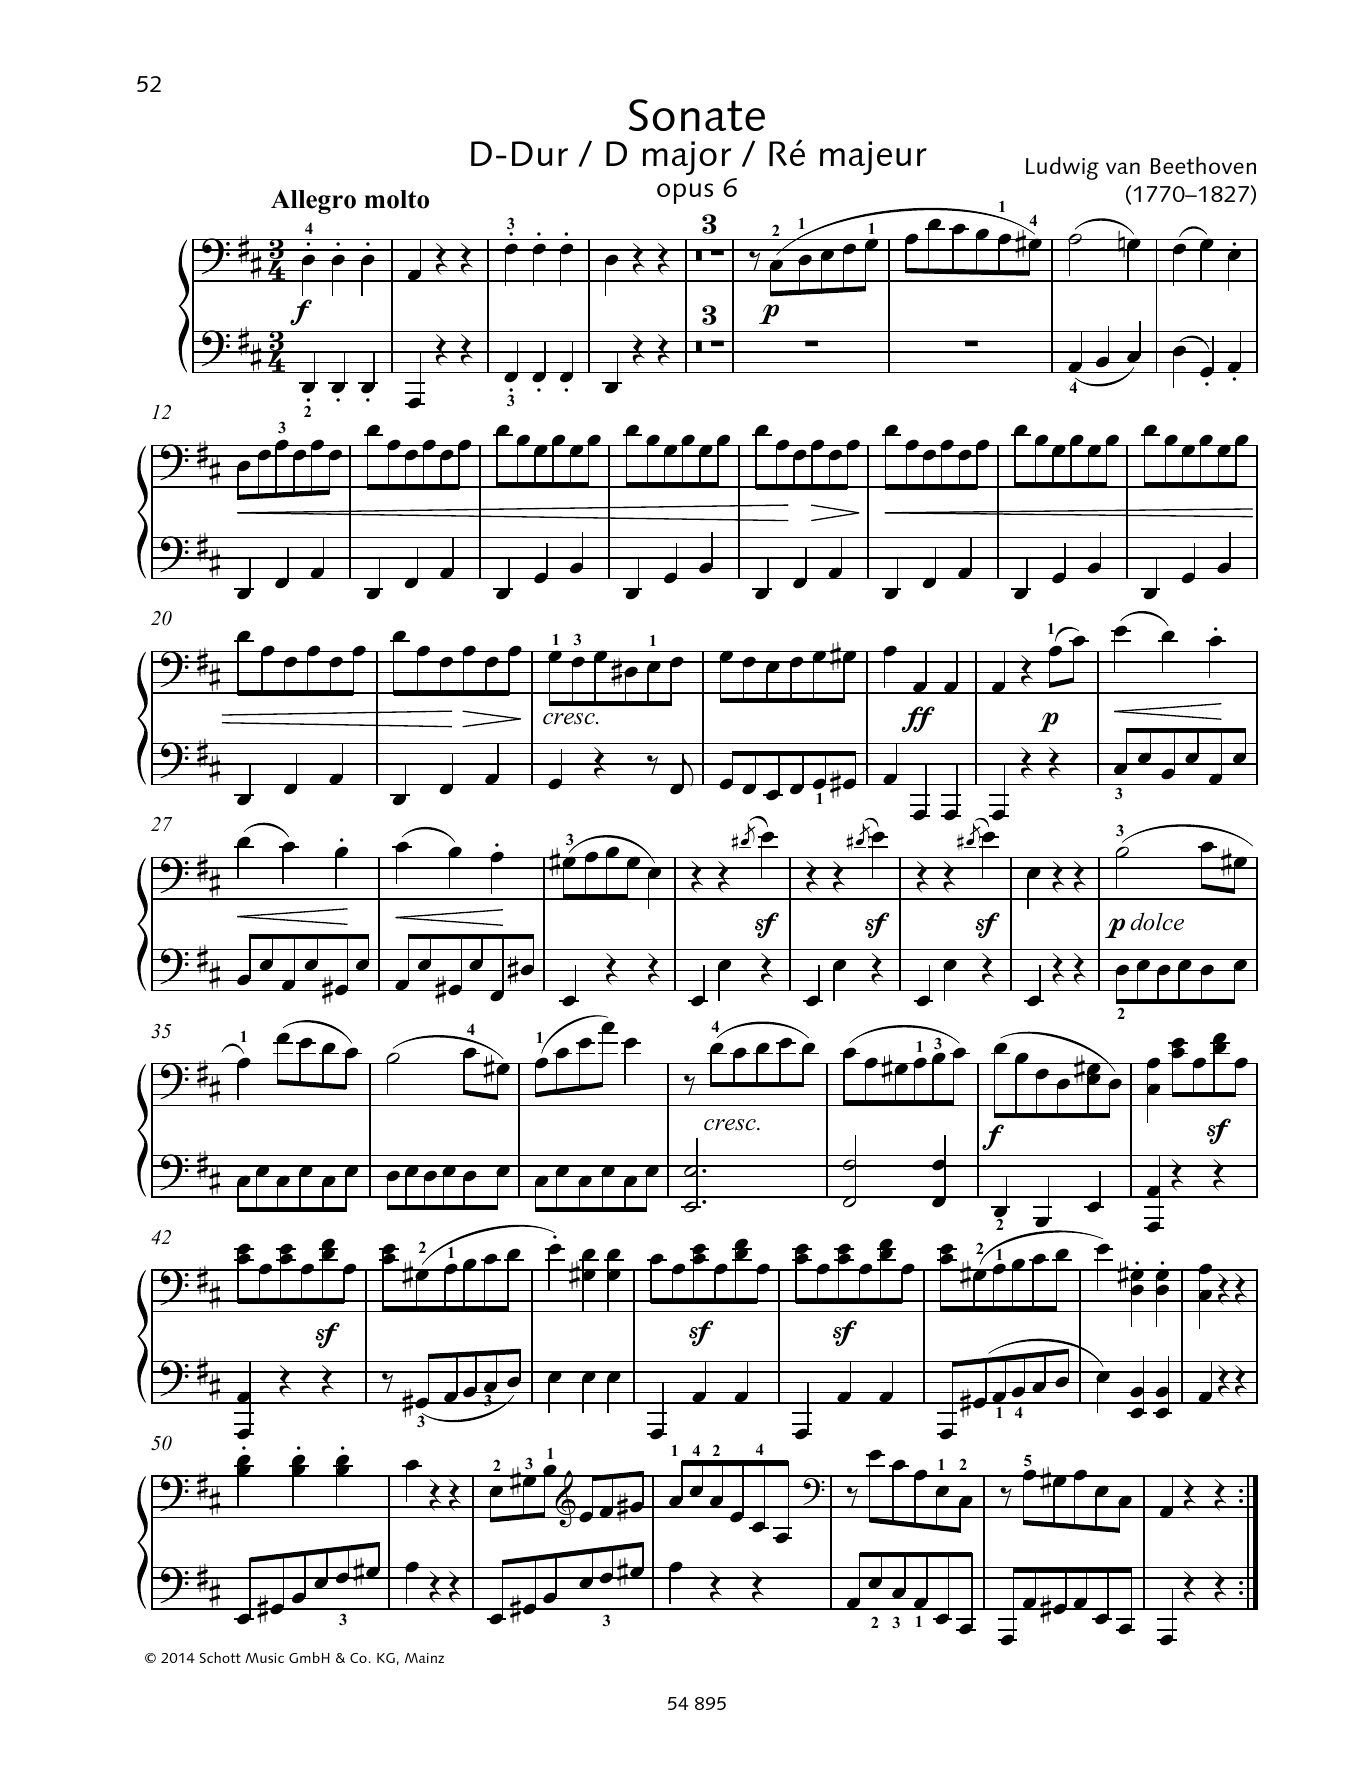 Ludwig van Beethoven Sonata D Major Sheet Music Notes & Chords for Piano Duet - Download or Print PDF